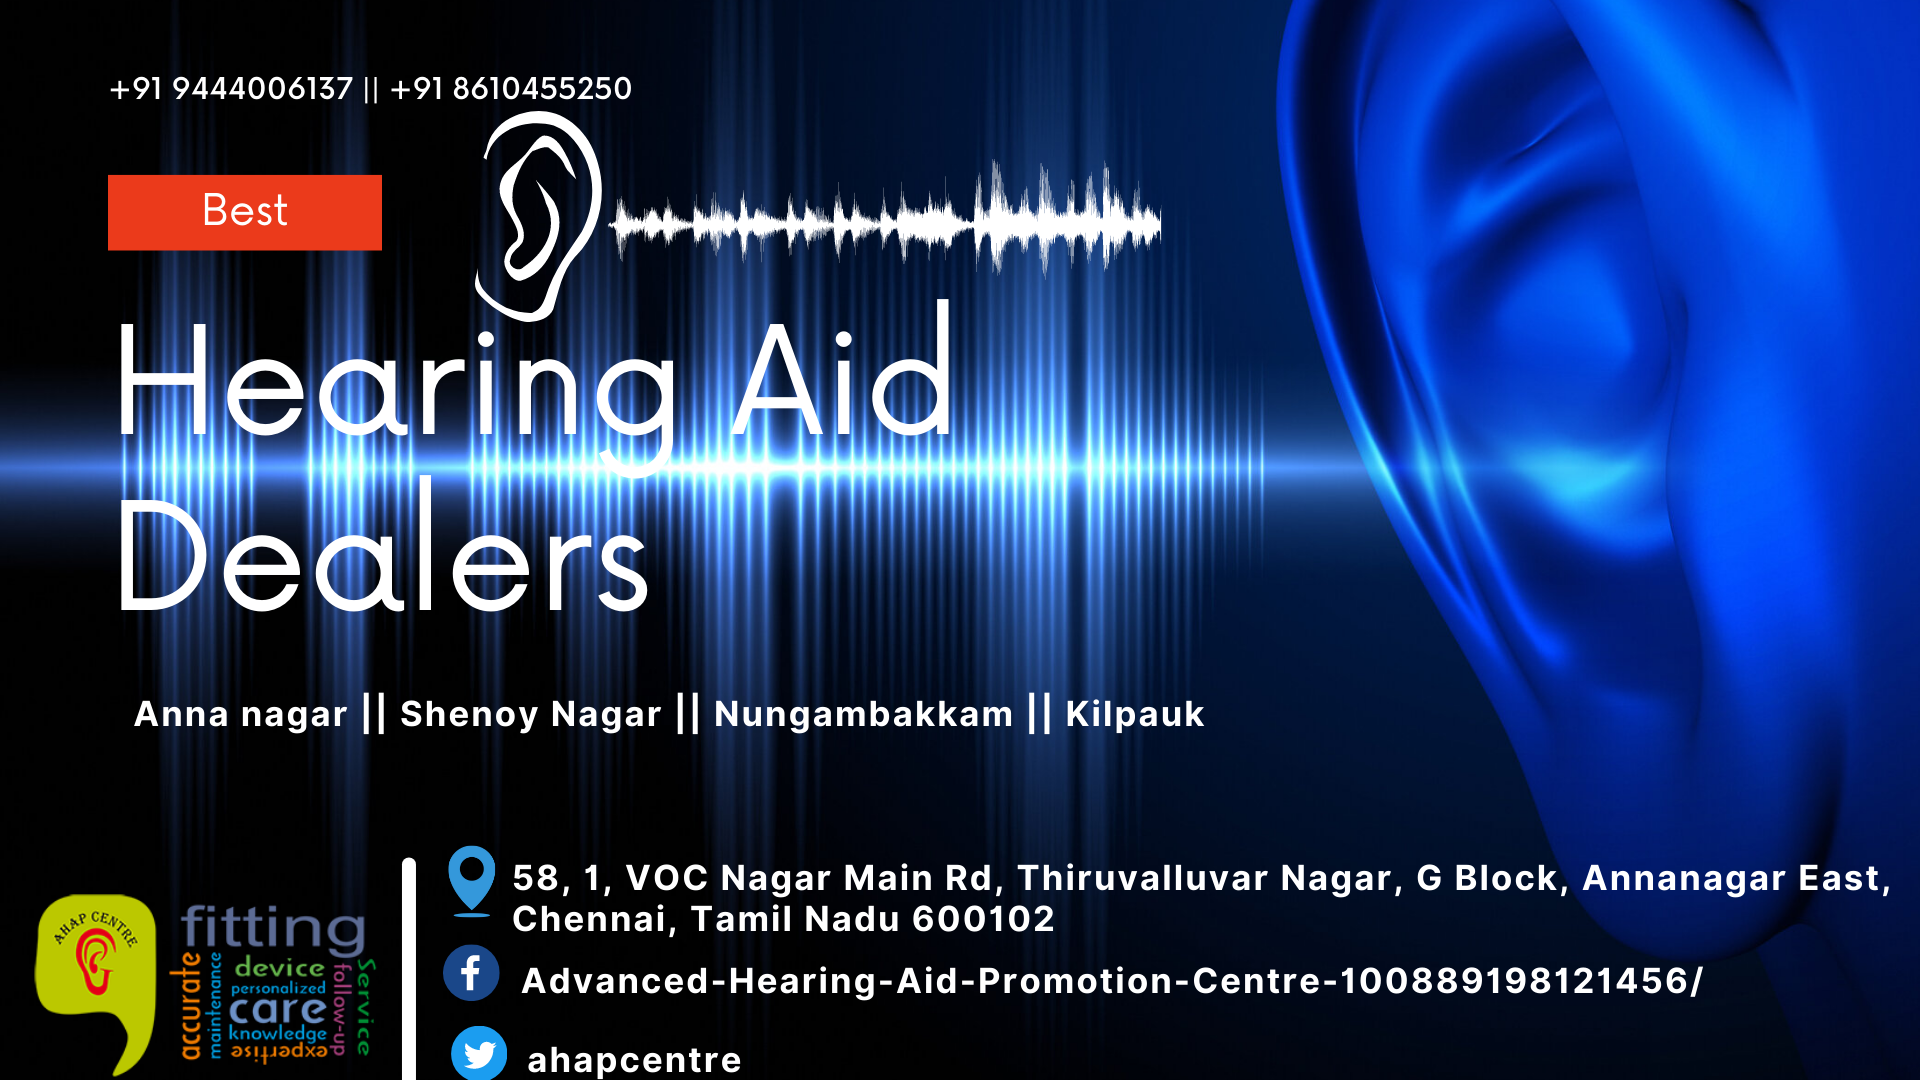 Hearing Aid dealers In Annanagar, Shenoy nagar